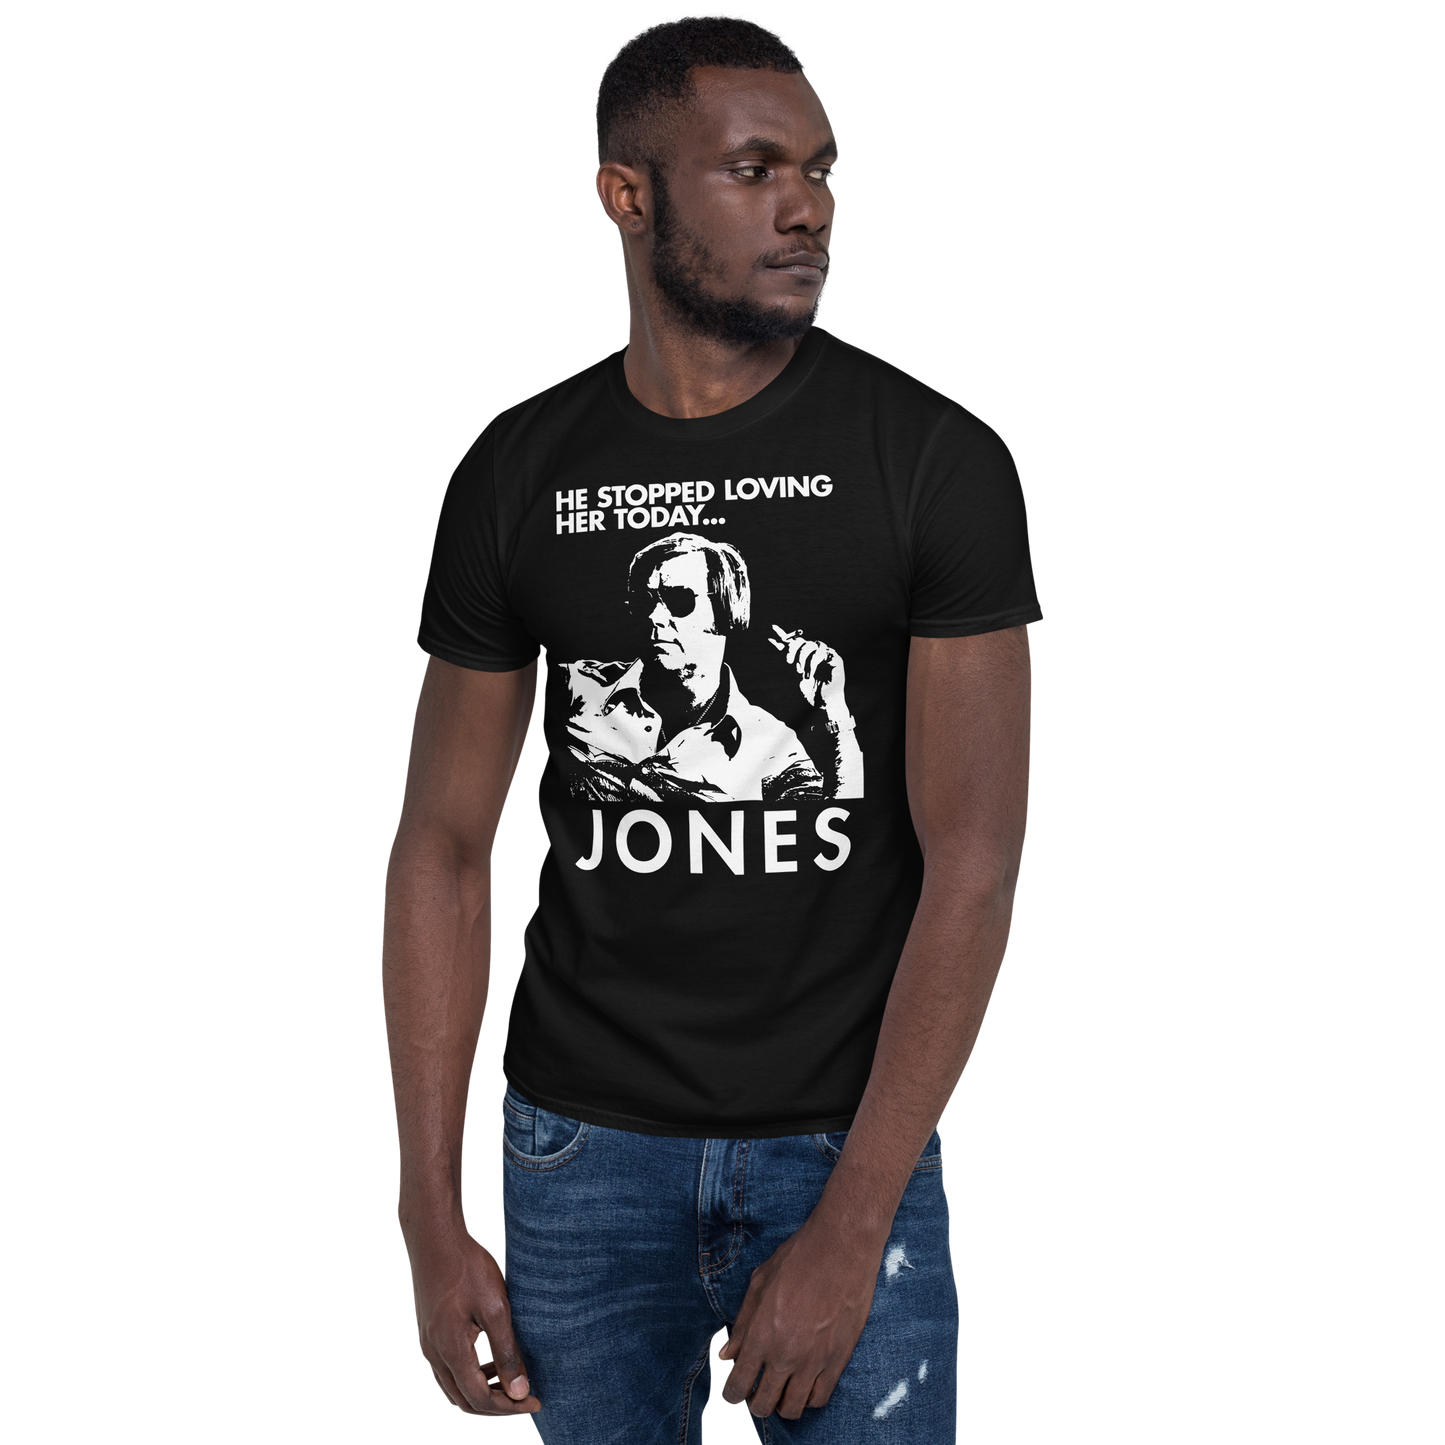 JONES T-Shirt